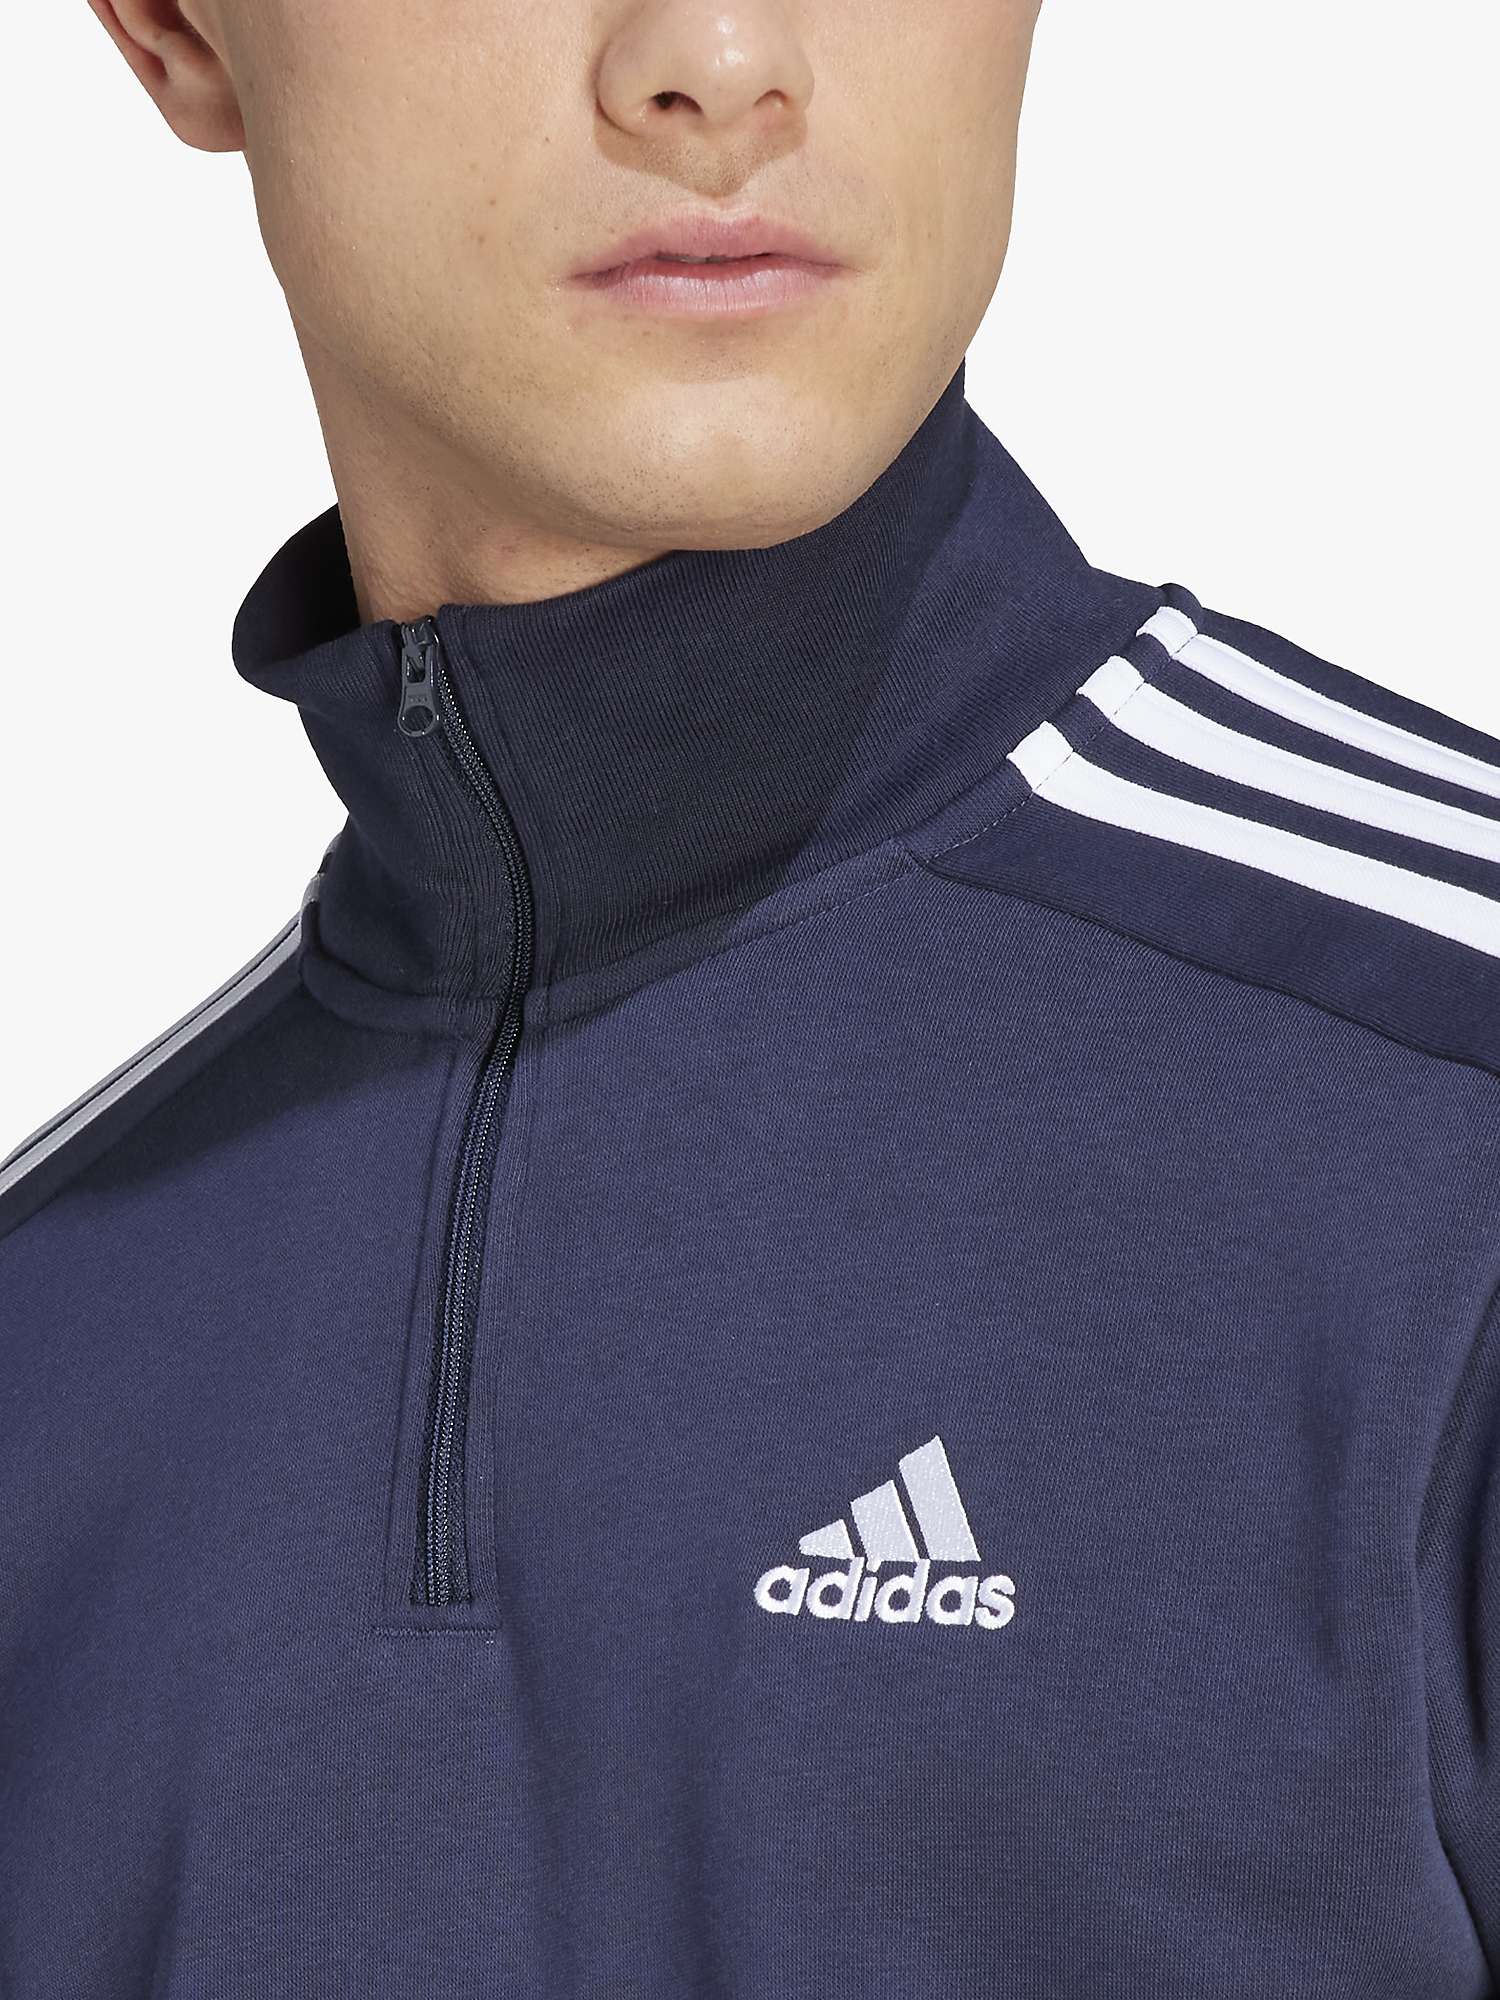 Buy adidas 3-Stripes Fleece 1/4 Zip Sweatshirt, Legend Ink/White Online at johnlewis.com